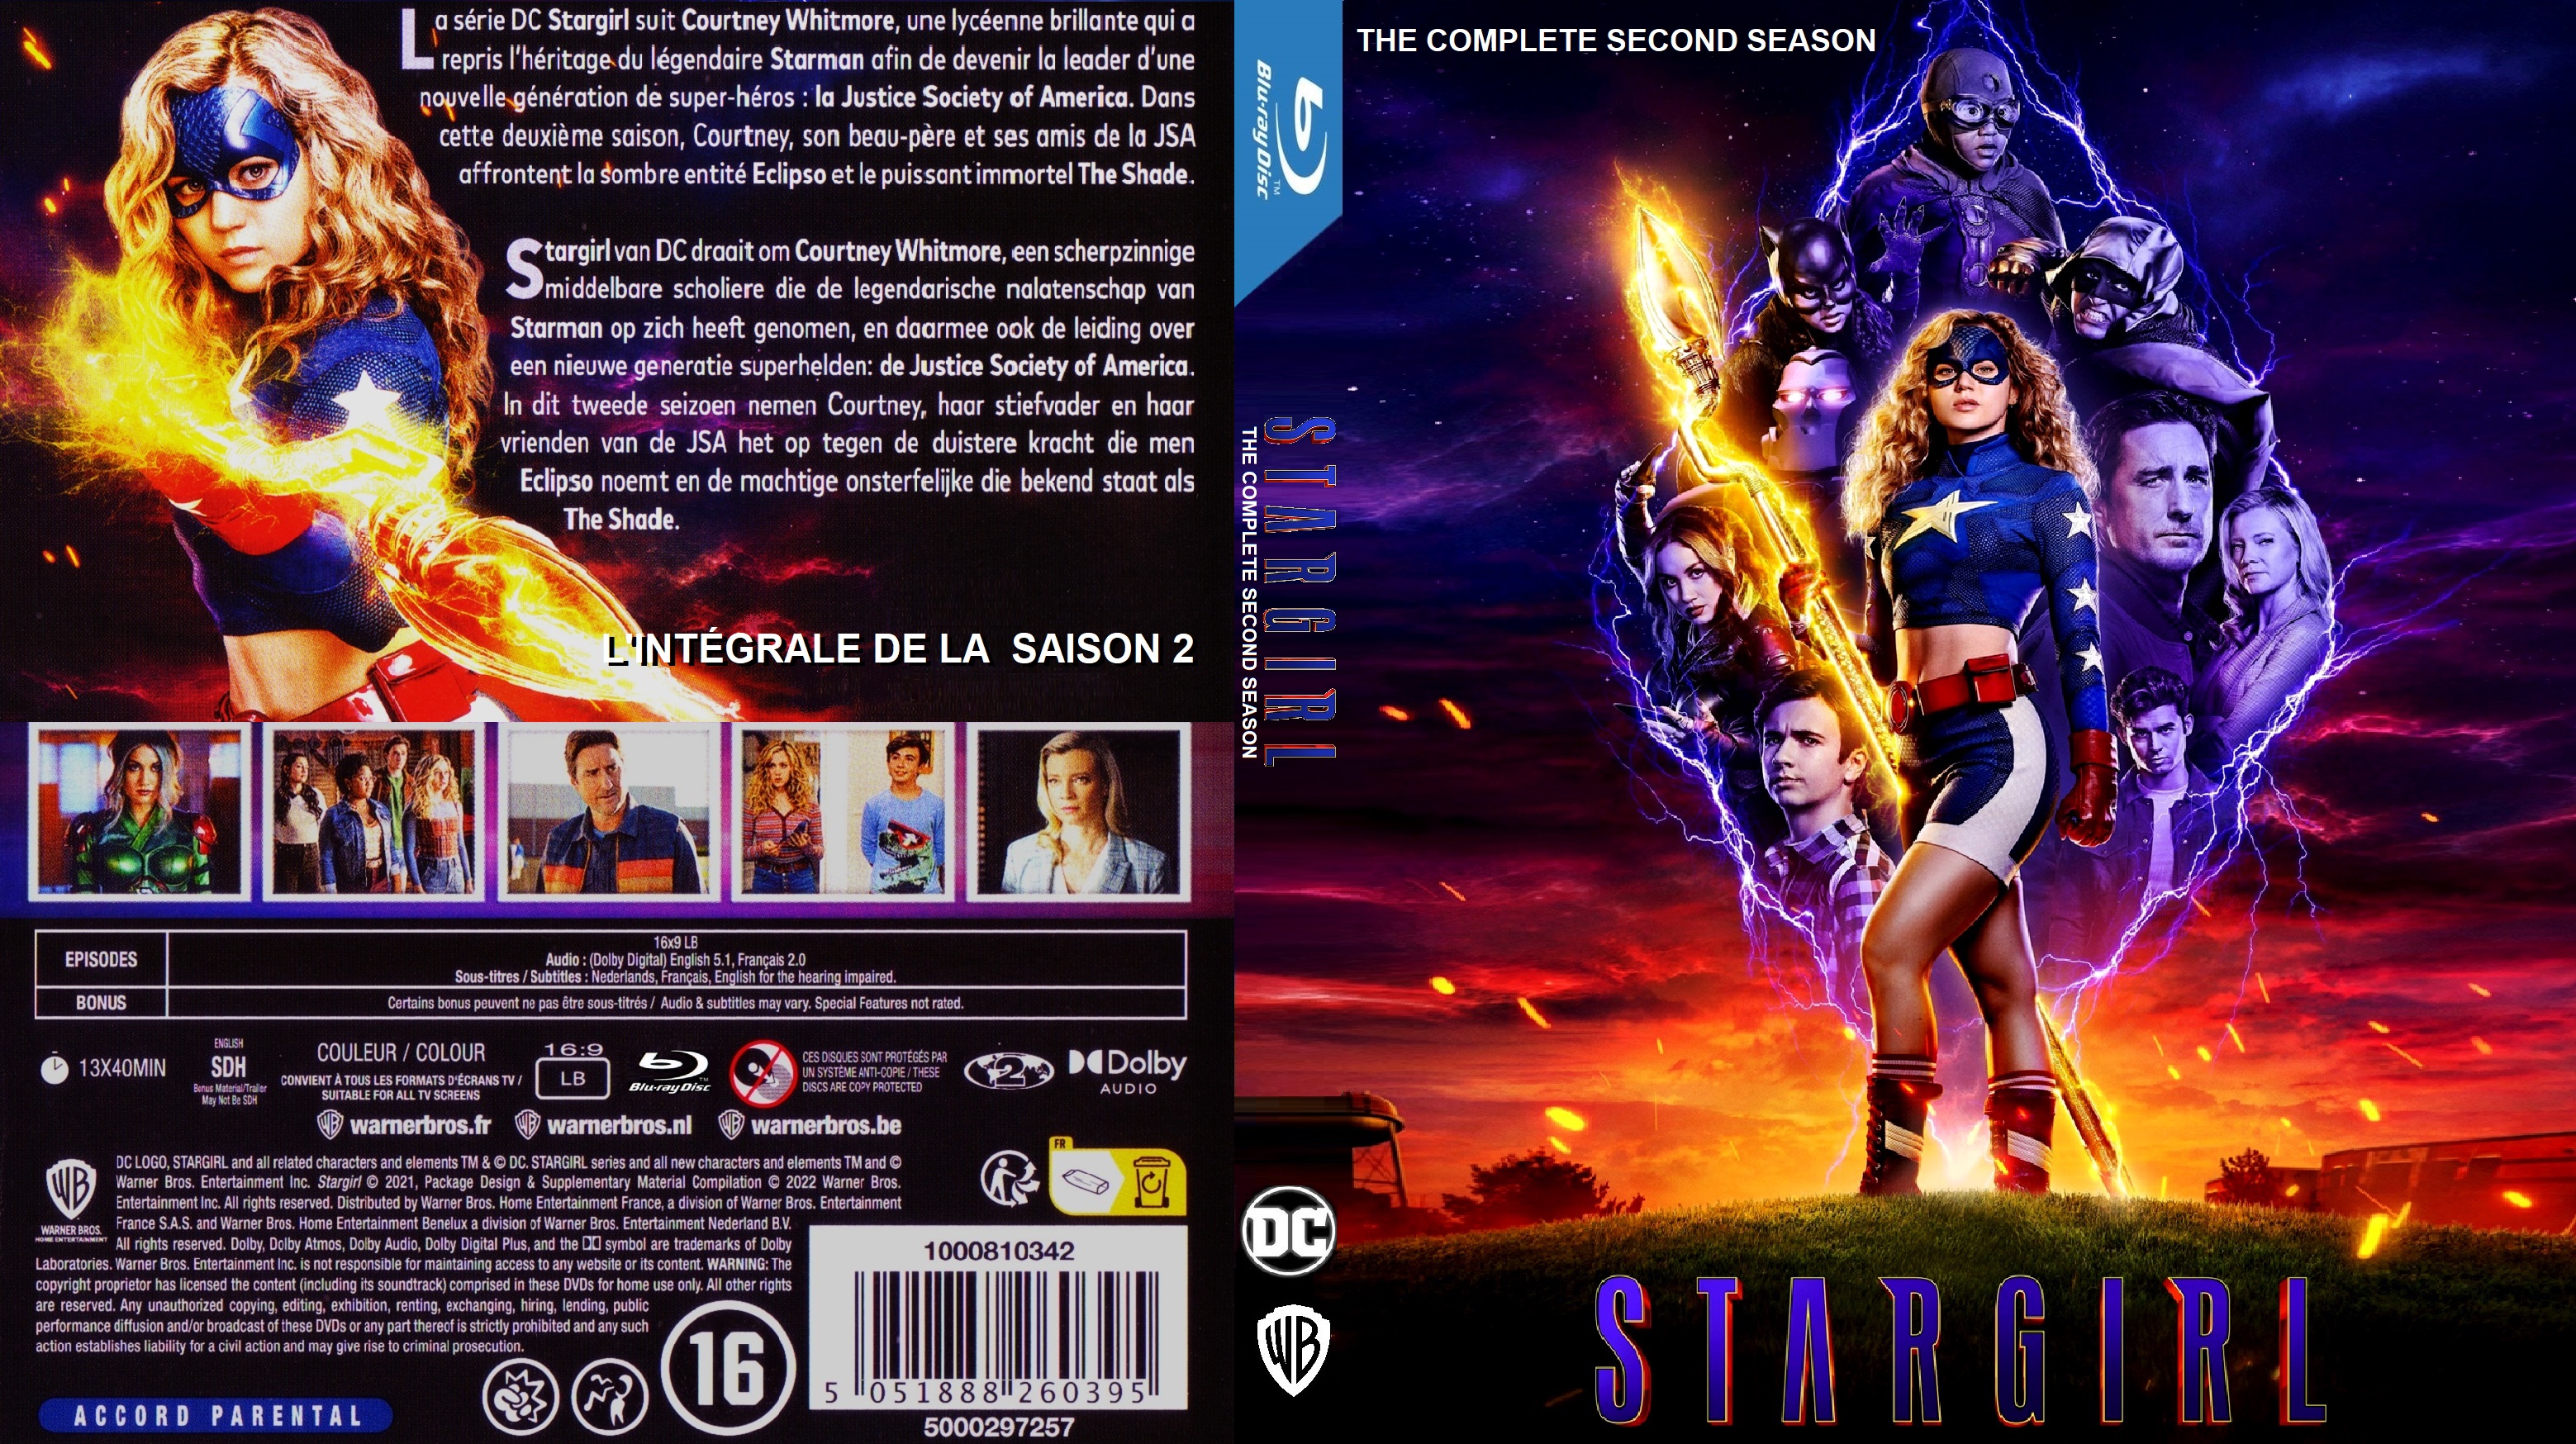 Jaquette DVD Stargirl Saison 2 BLU-RAY custom